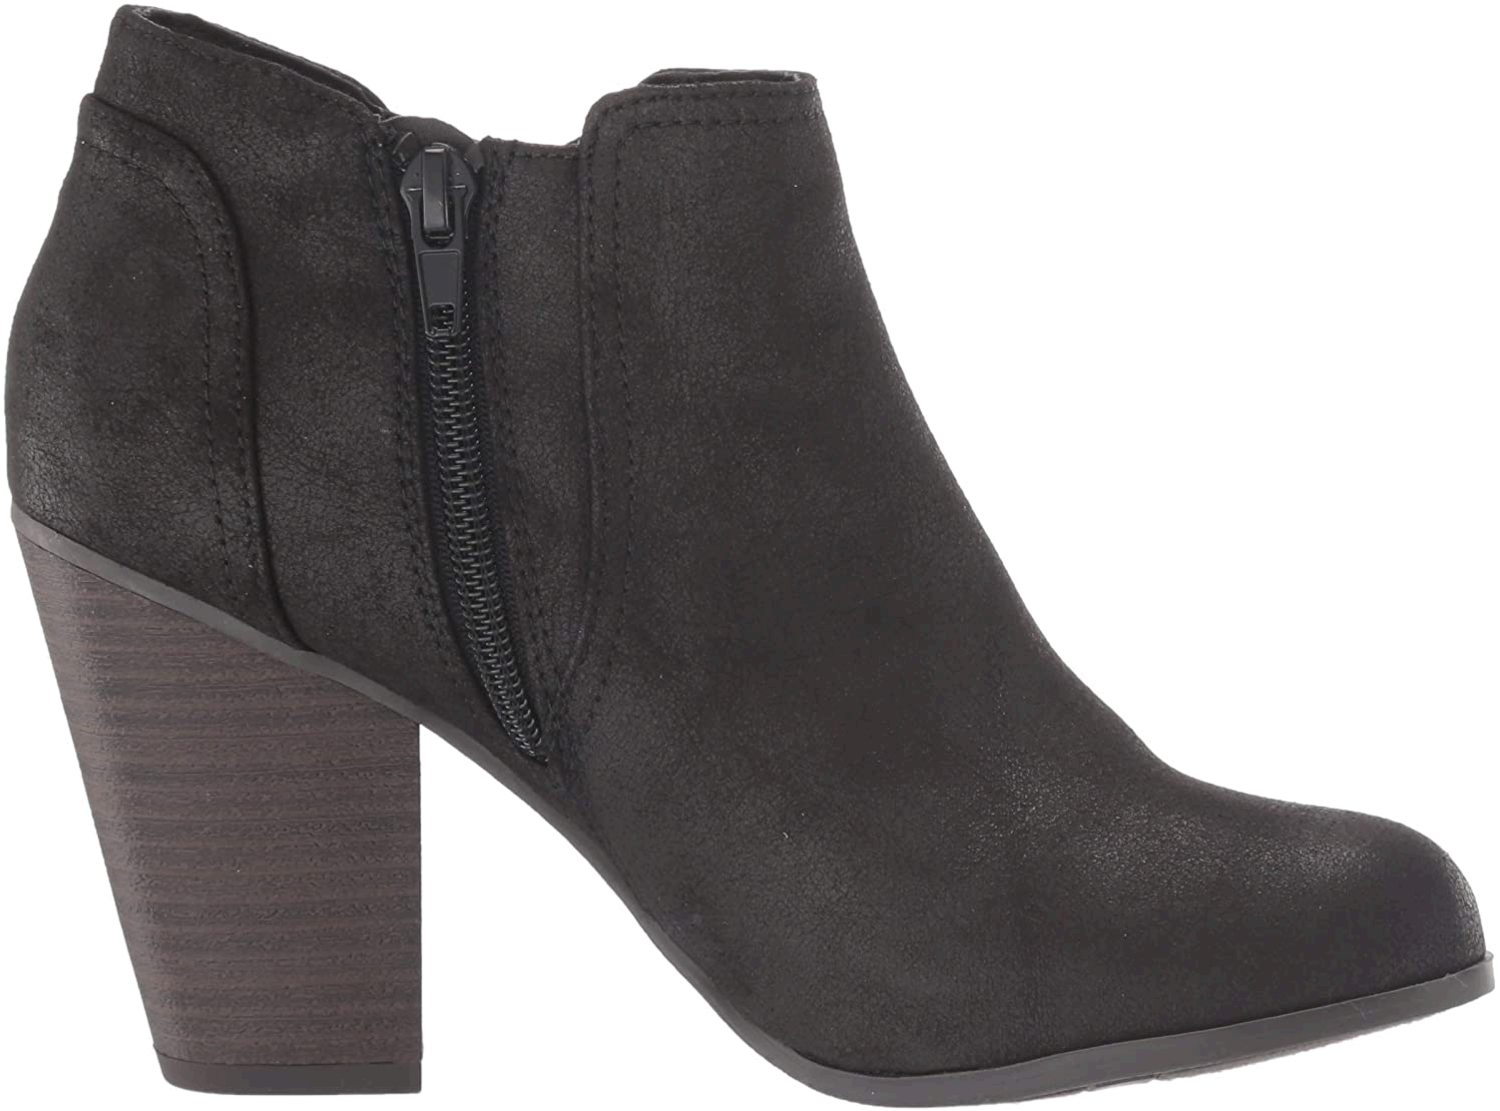 Fergie Women's Passport Ankle/Bootie Boot, Black, Size 7.0 5TD1 | eBay